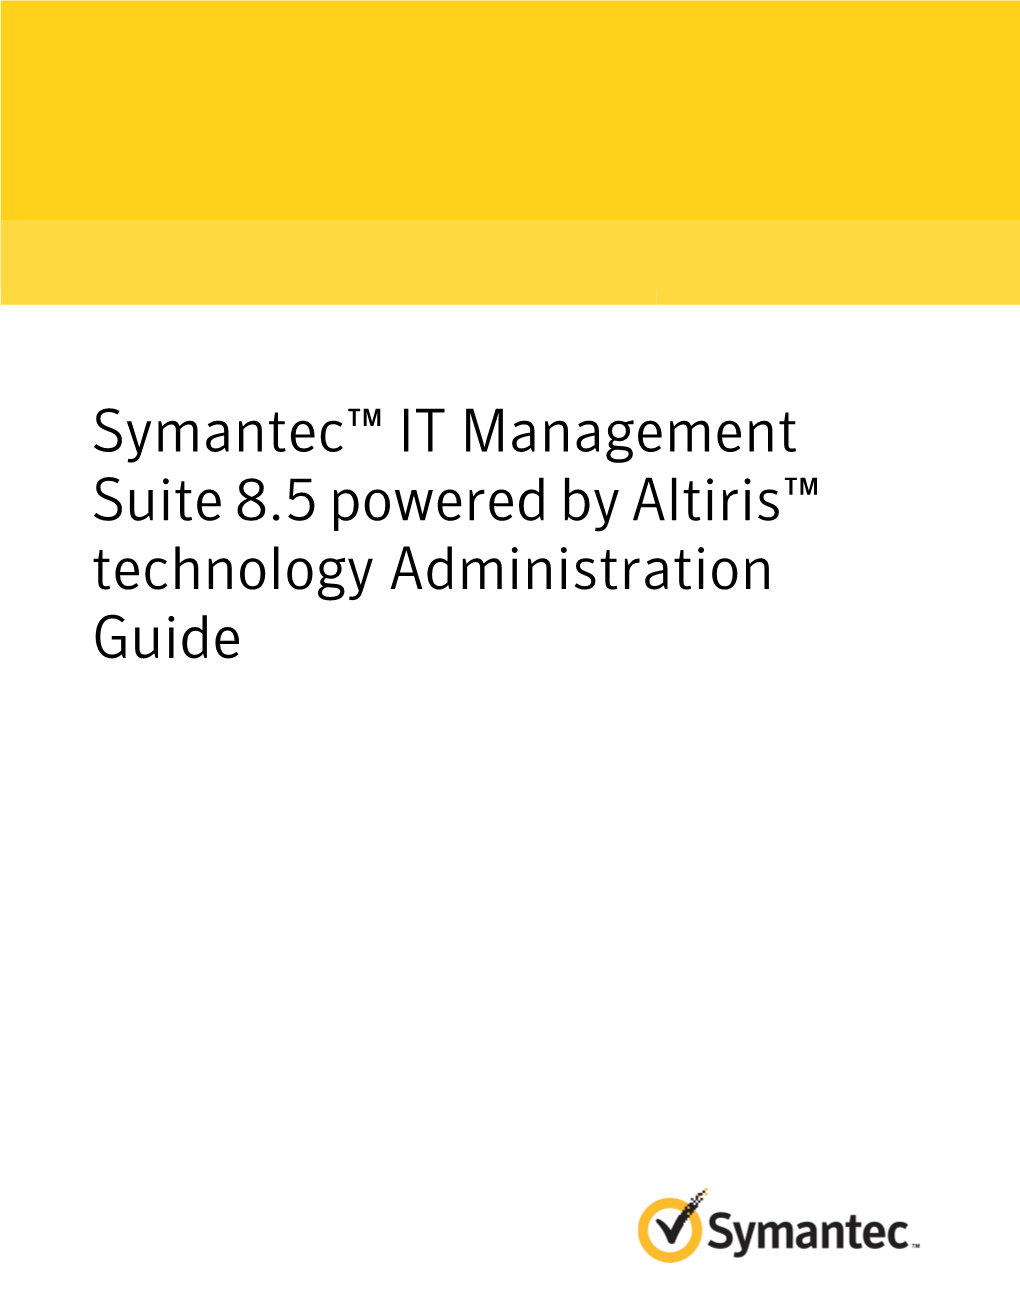 Symantec™ IT Management Suite 8.5 Powered by Altiris™ Technology